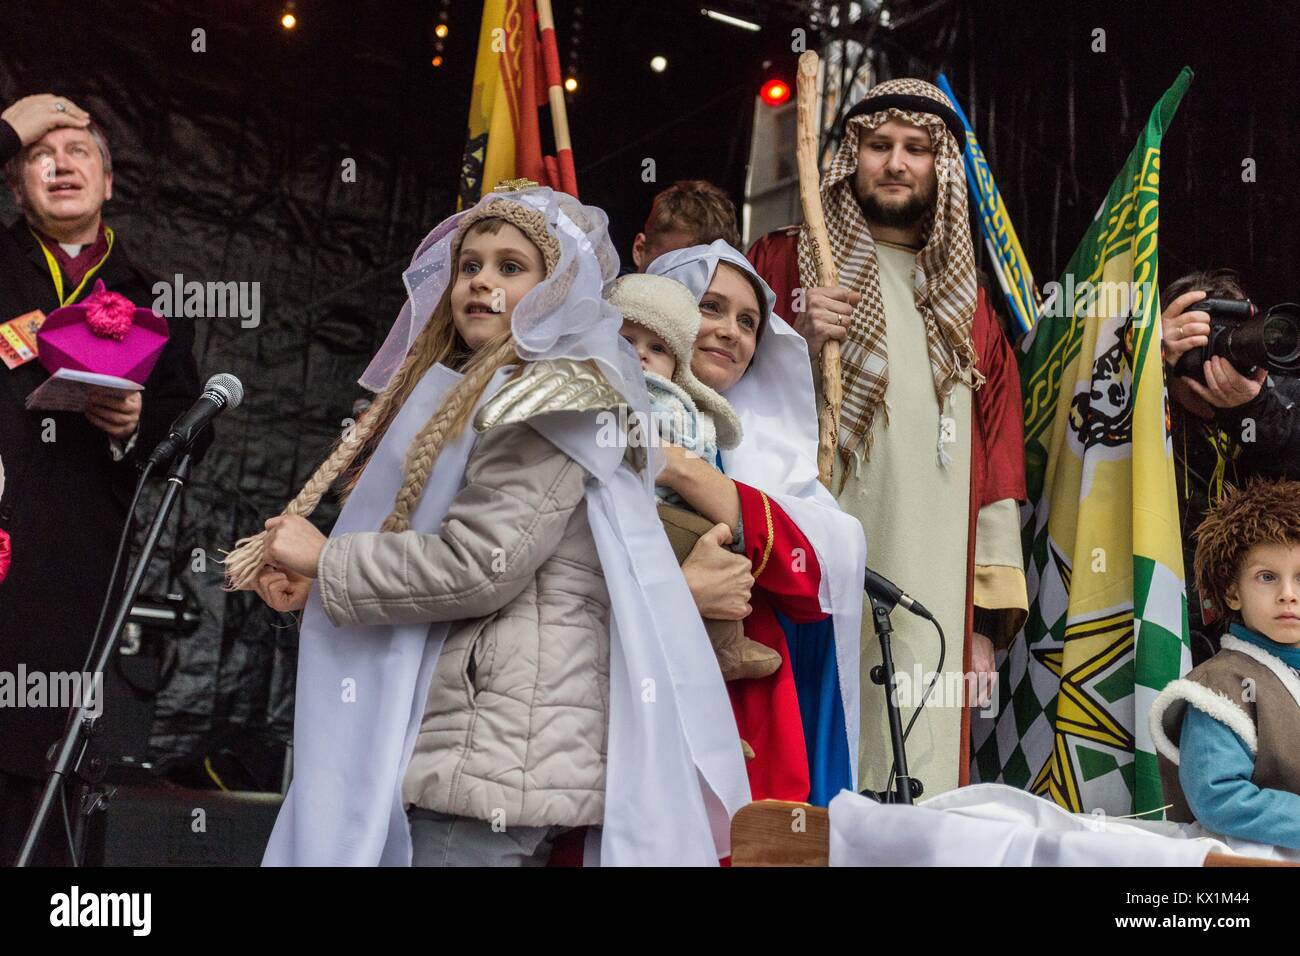 Wroclaw, Poland 6th January 2018 The Procession of the Magi - the catholic Feast of the Epiphany in Wroclaw Krzysztof Kaniewski/Alamy Live News Stock Photo